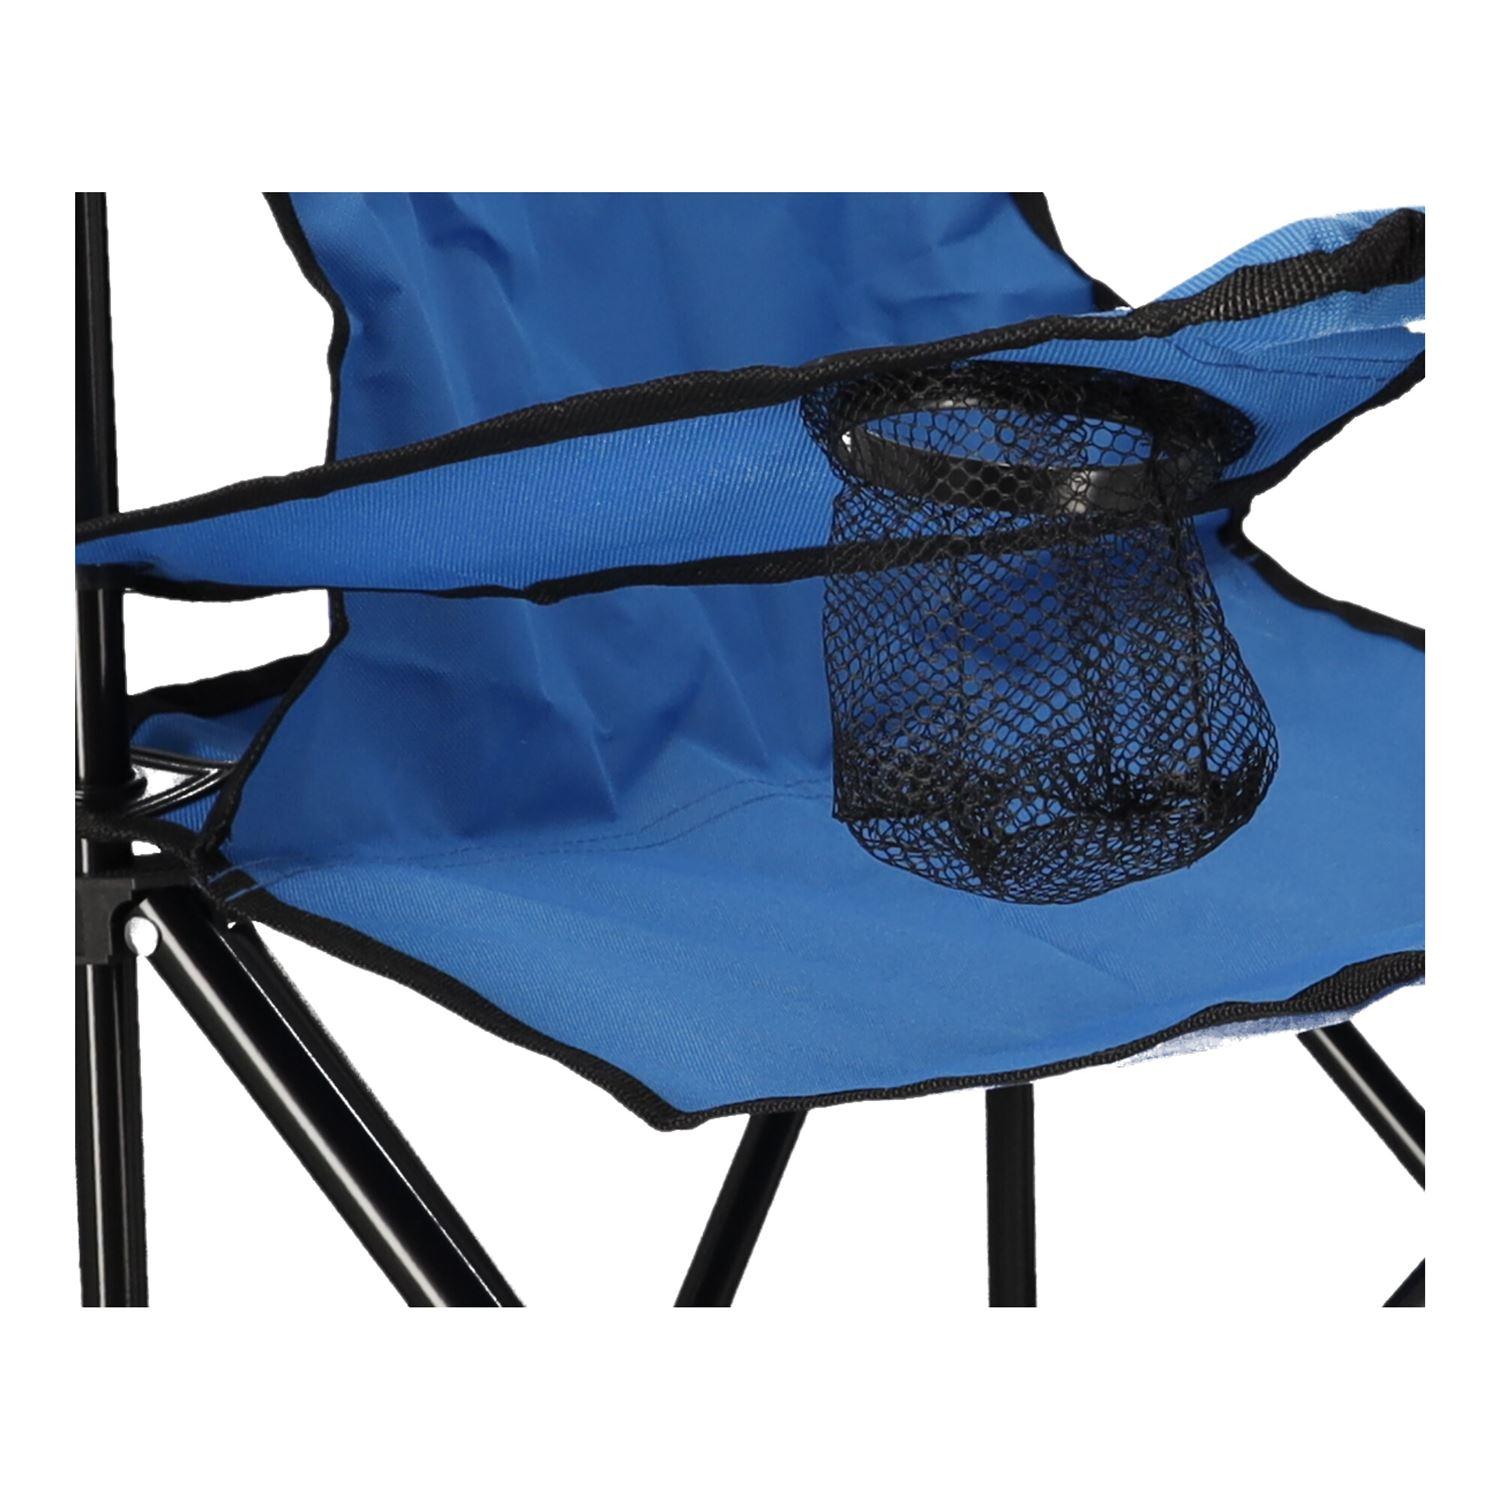 Folding Tourist Fishing Chair - Blue